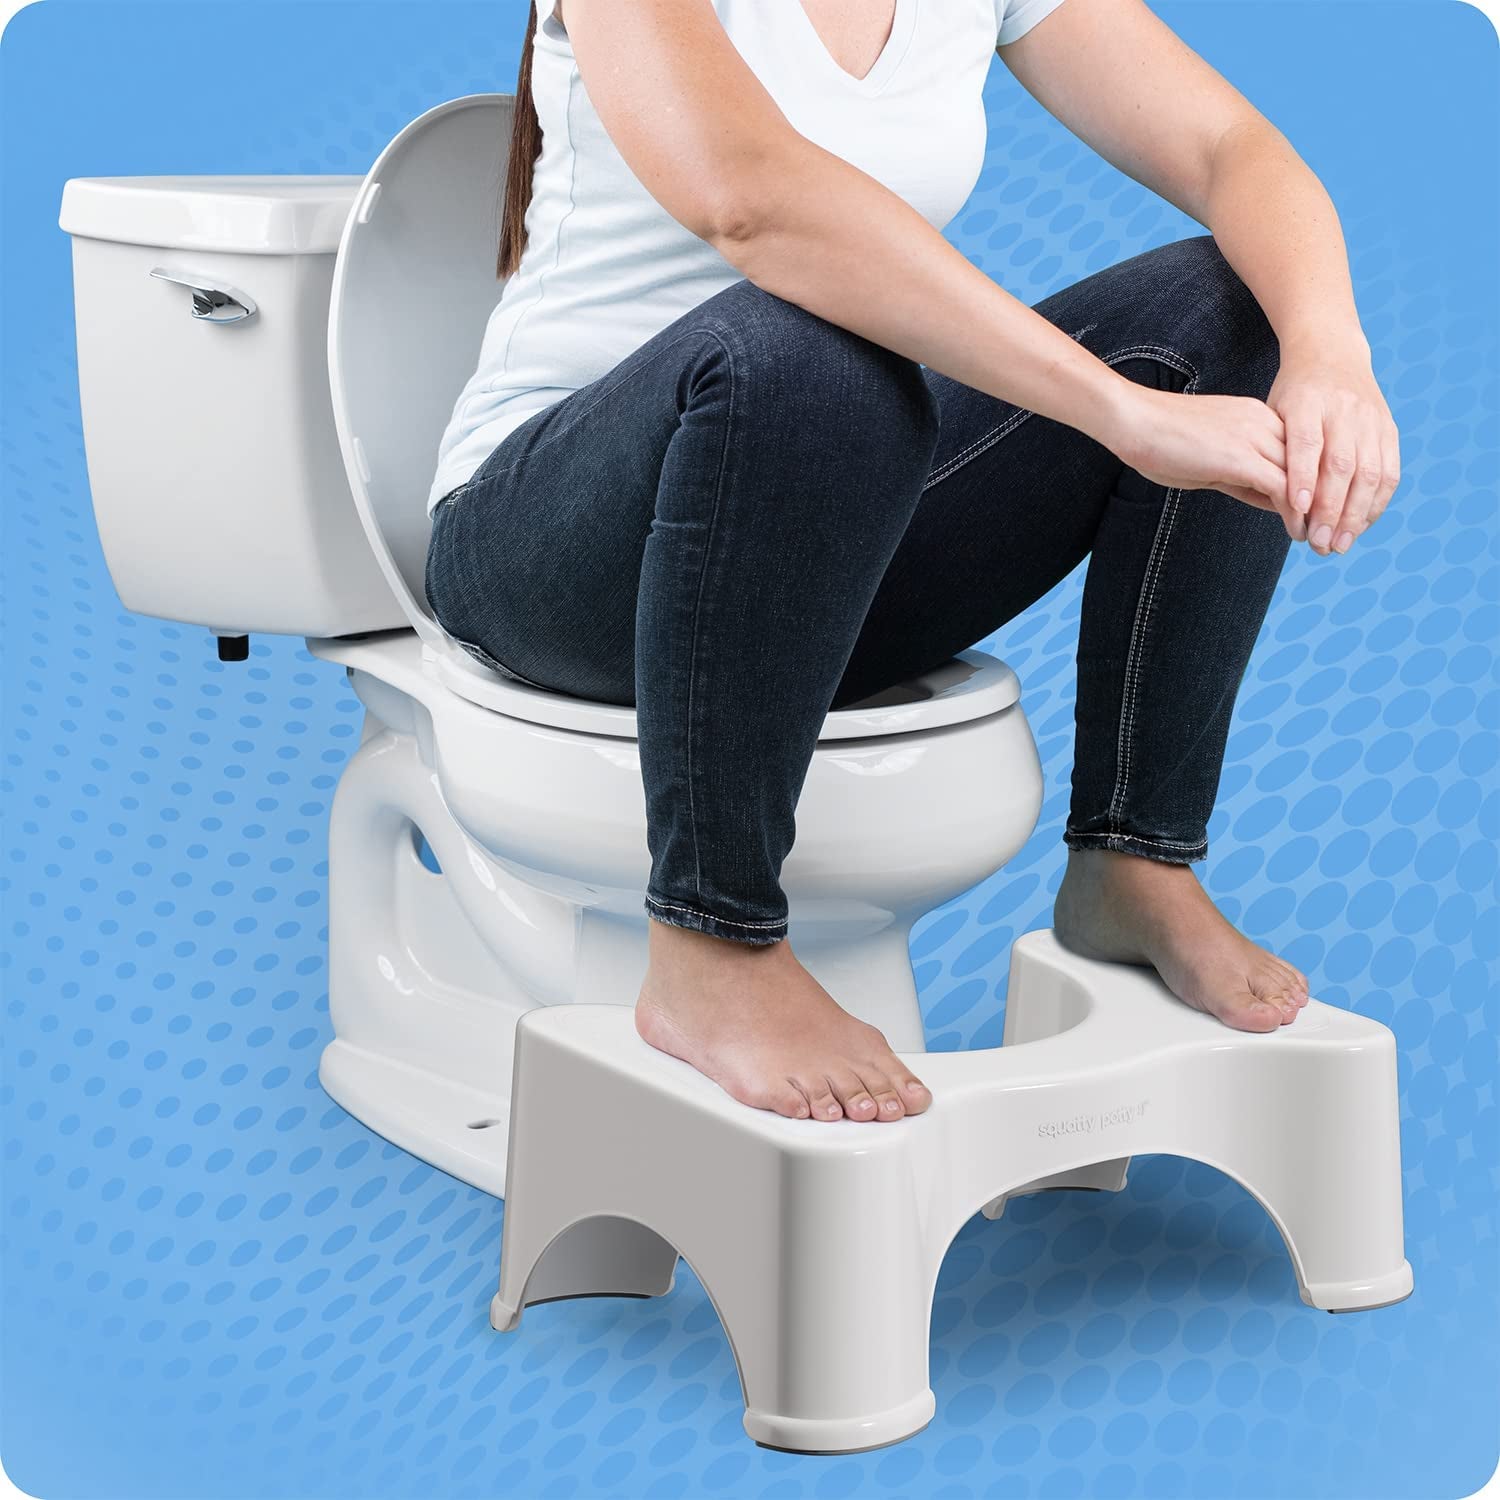 VIPoo Australia: Advert for Air Wick toilet spray raises eyebrows